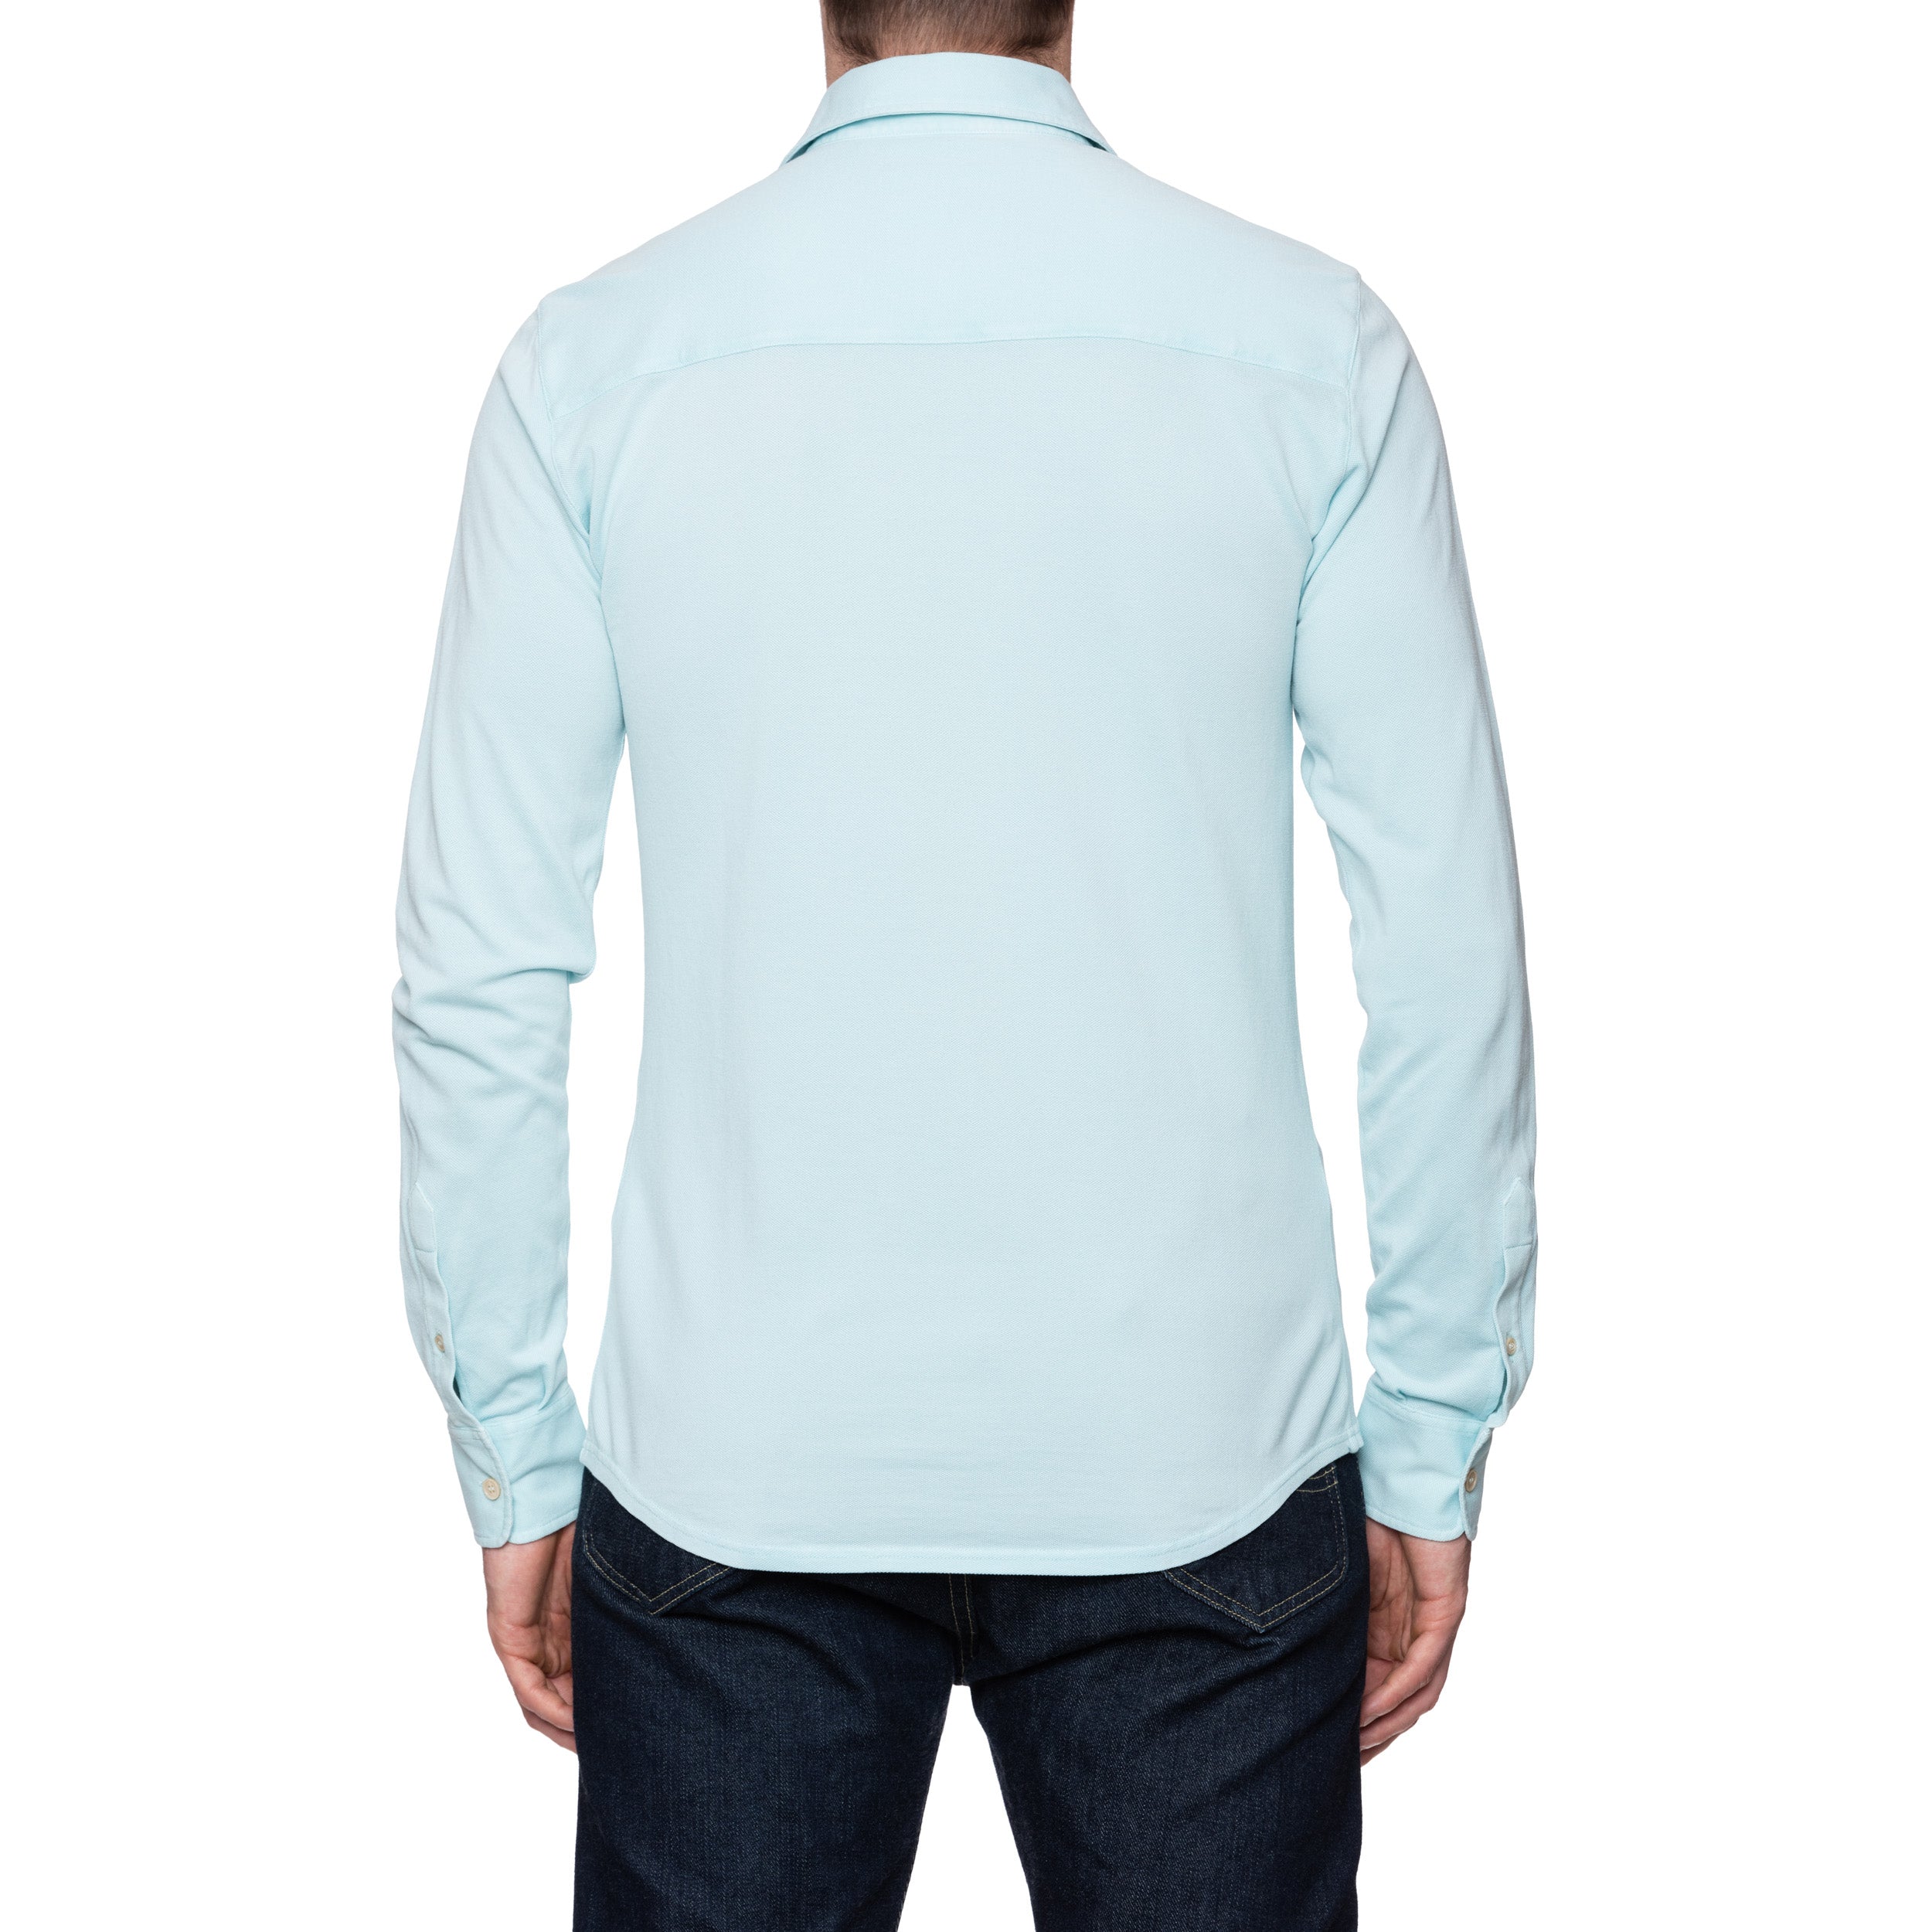 FEDELI 34 LAB "Pard" Light Blue Cotton Pique Long Sleeve Polo Shirt 46 NEW FEDELI